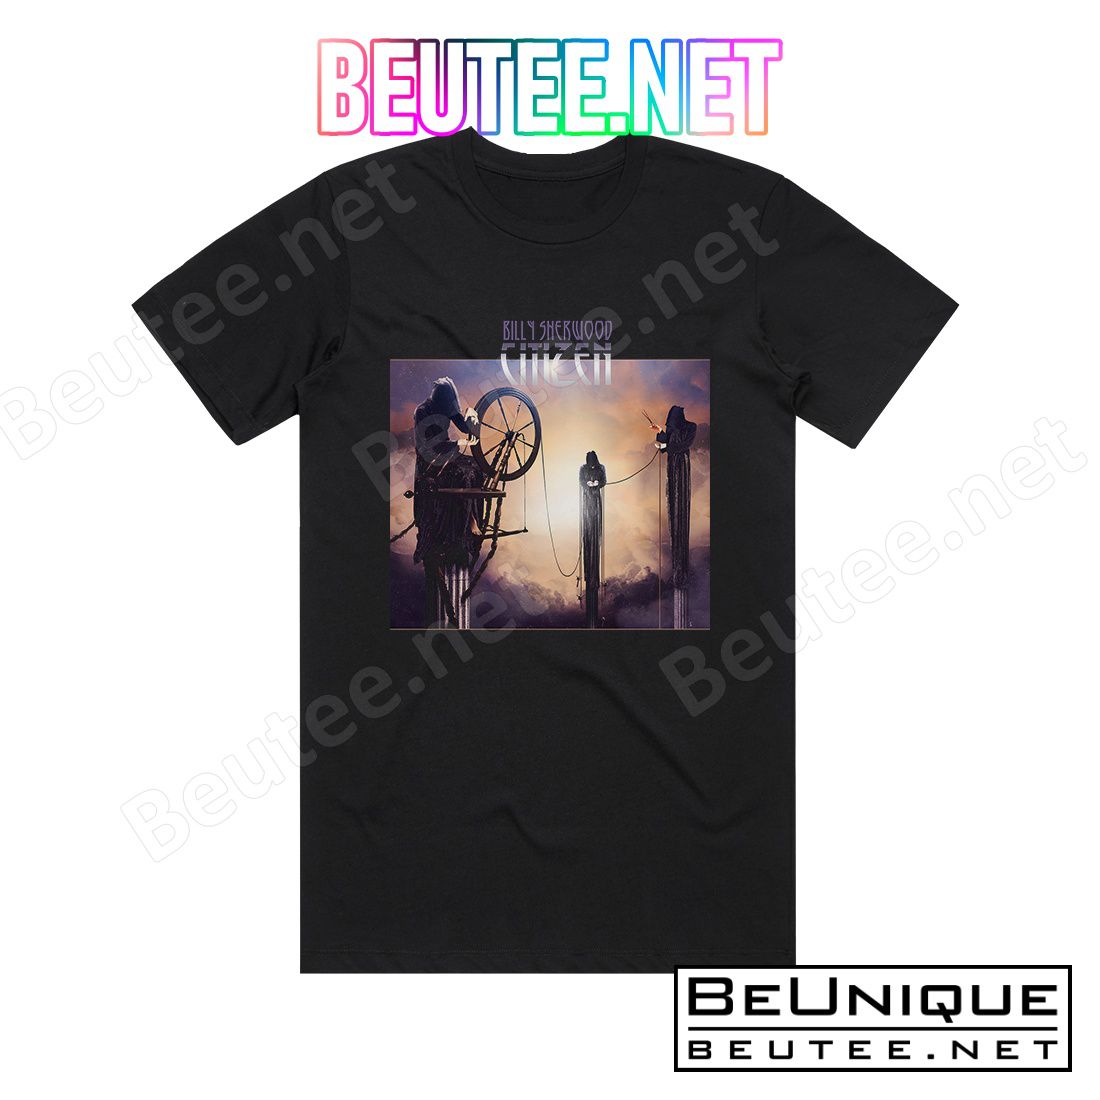 Billy Sherwood Citizen Album Cover T-Shirt